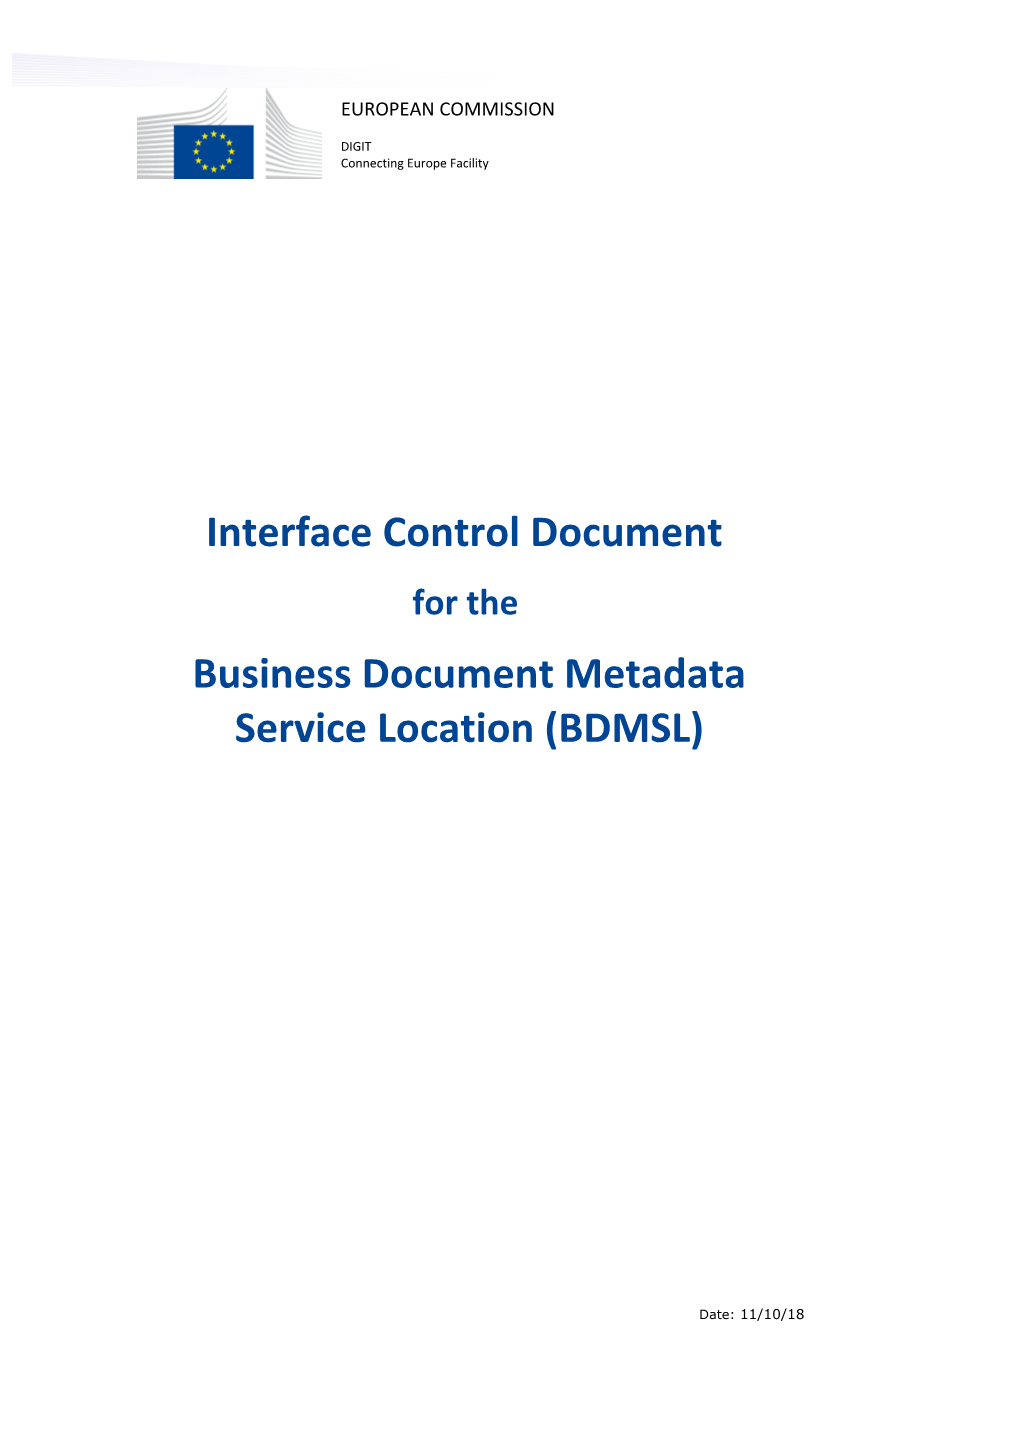 Business Document Metadata Service Location (BDMSL)